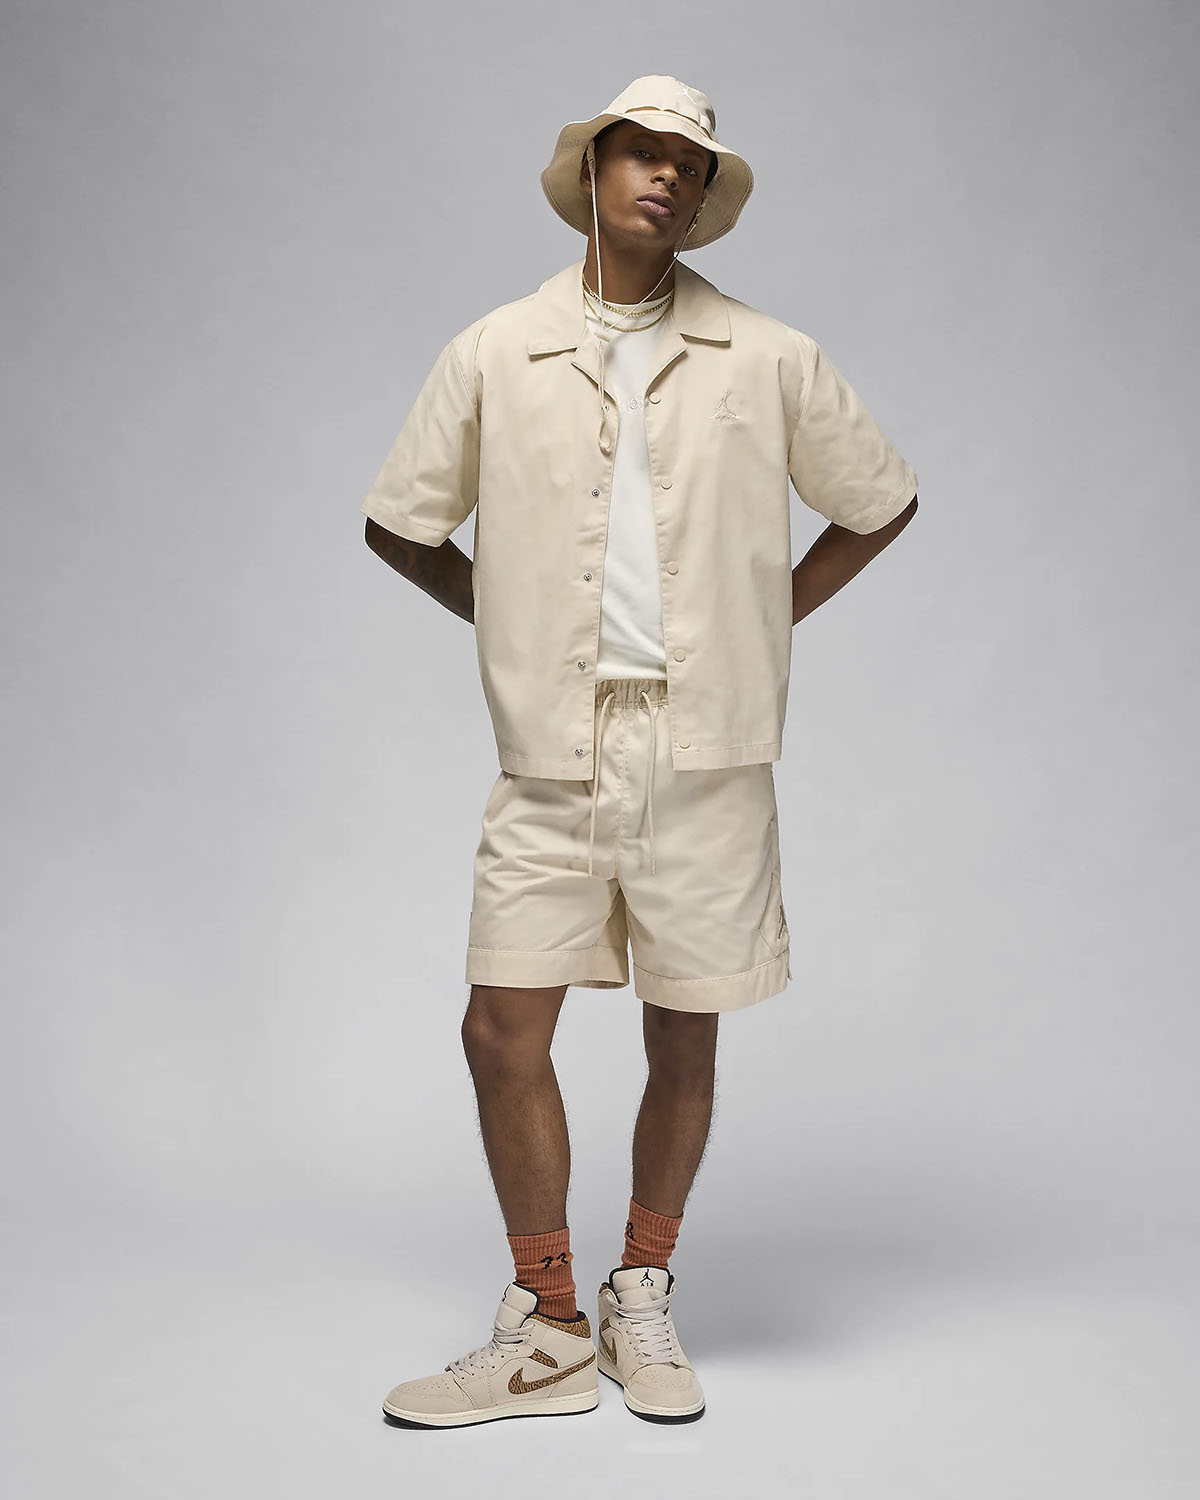 Jordan Nero Legend Light Brown Shirt Shorts Hat Outfit